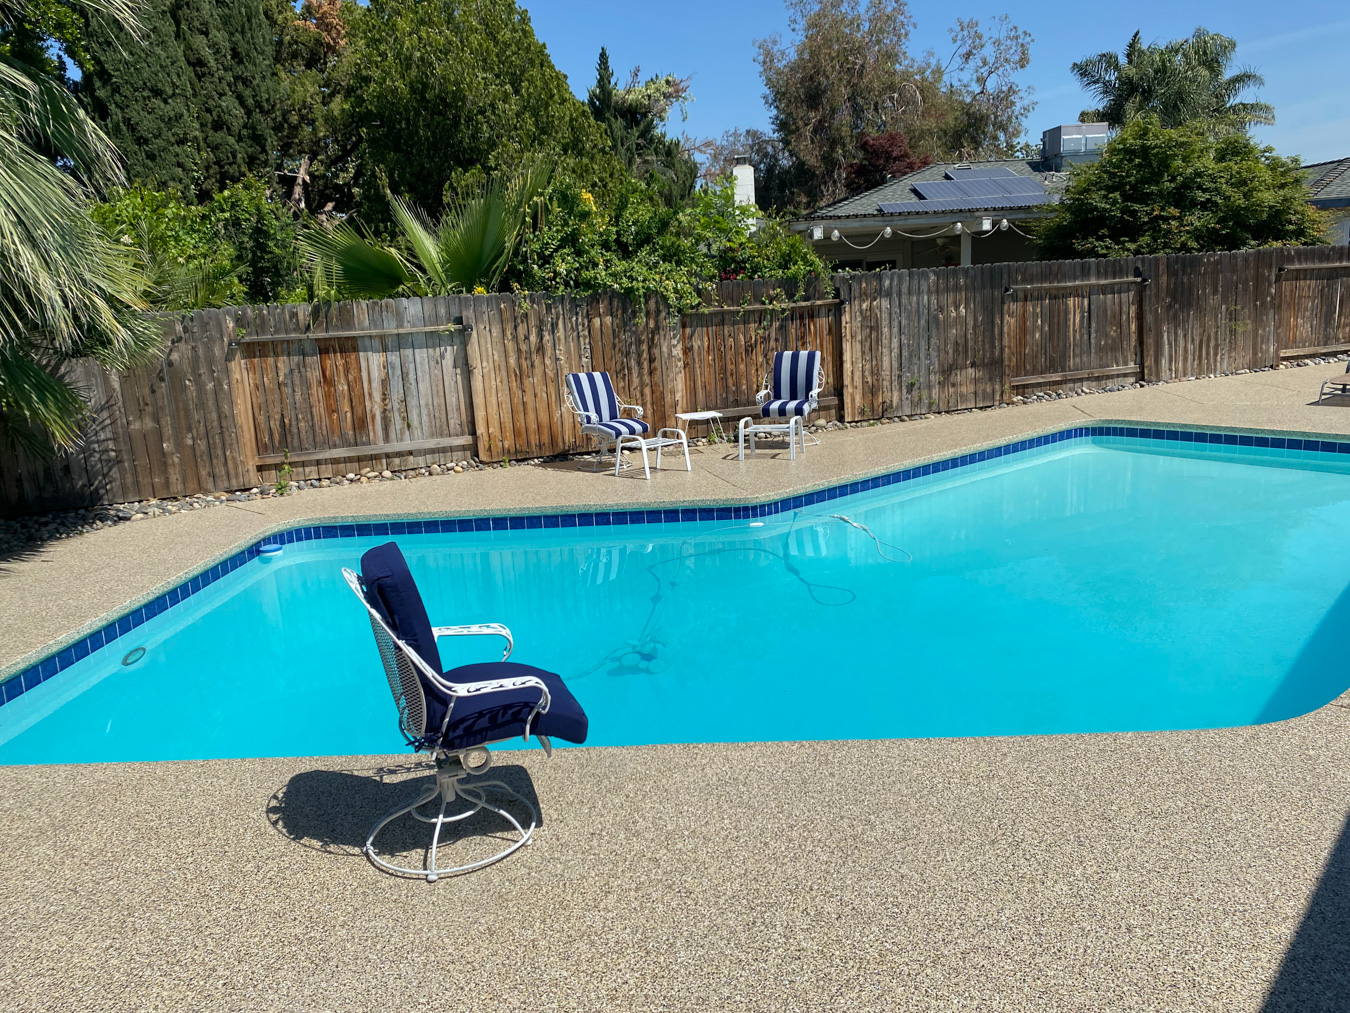 Pool with tan concrete epoxy coating